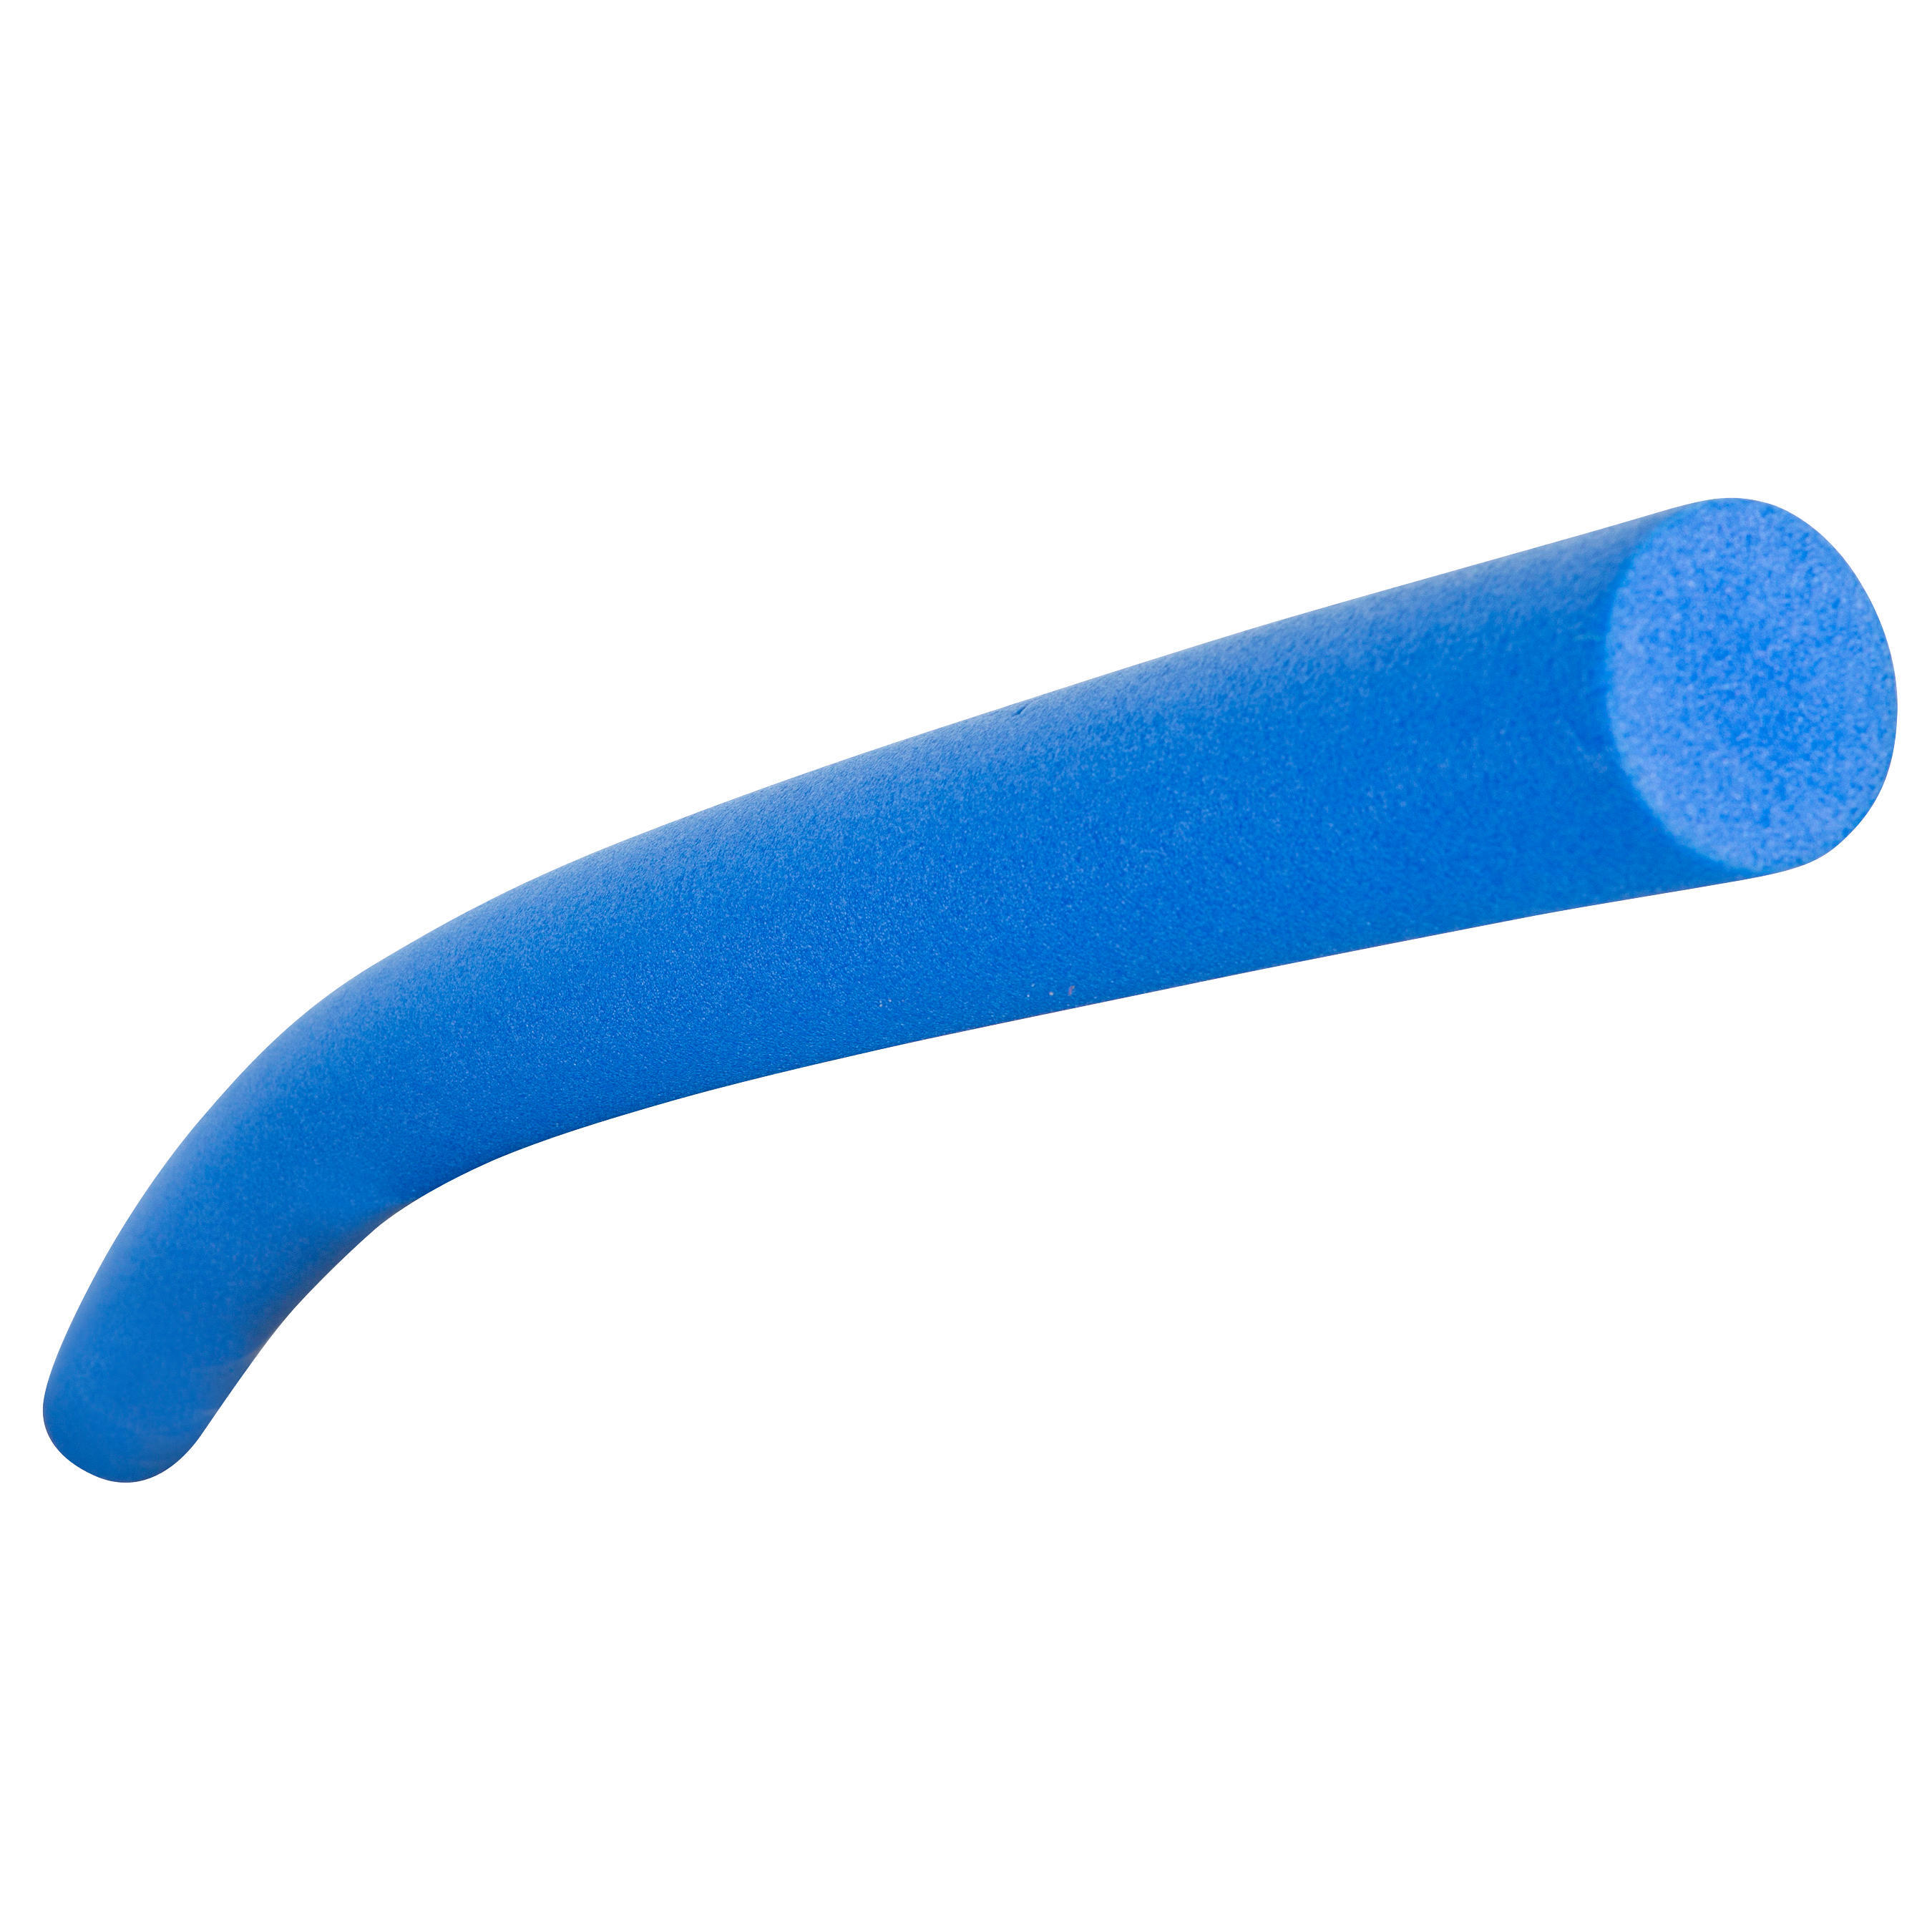 Foam swimming pool noodle 160 cm - blue  1/2